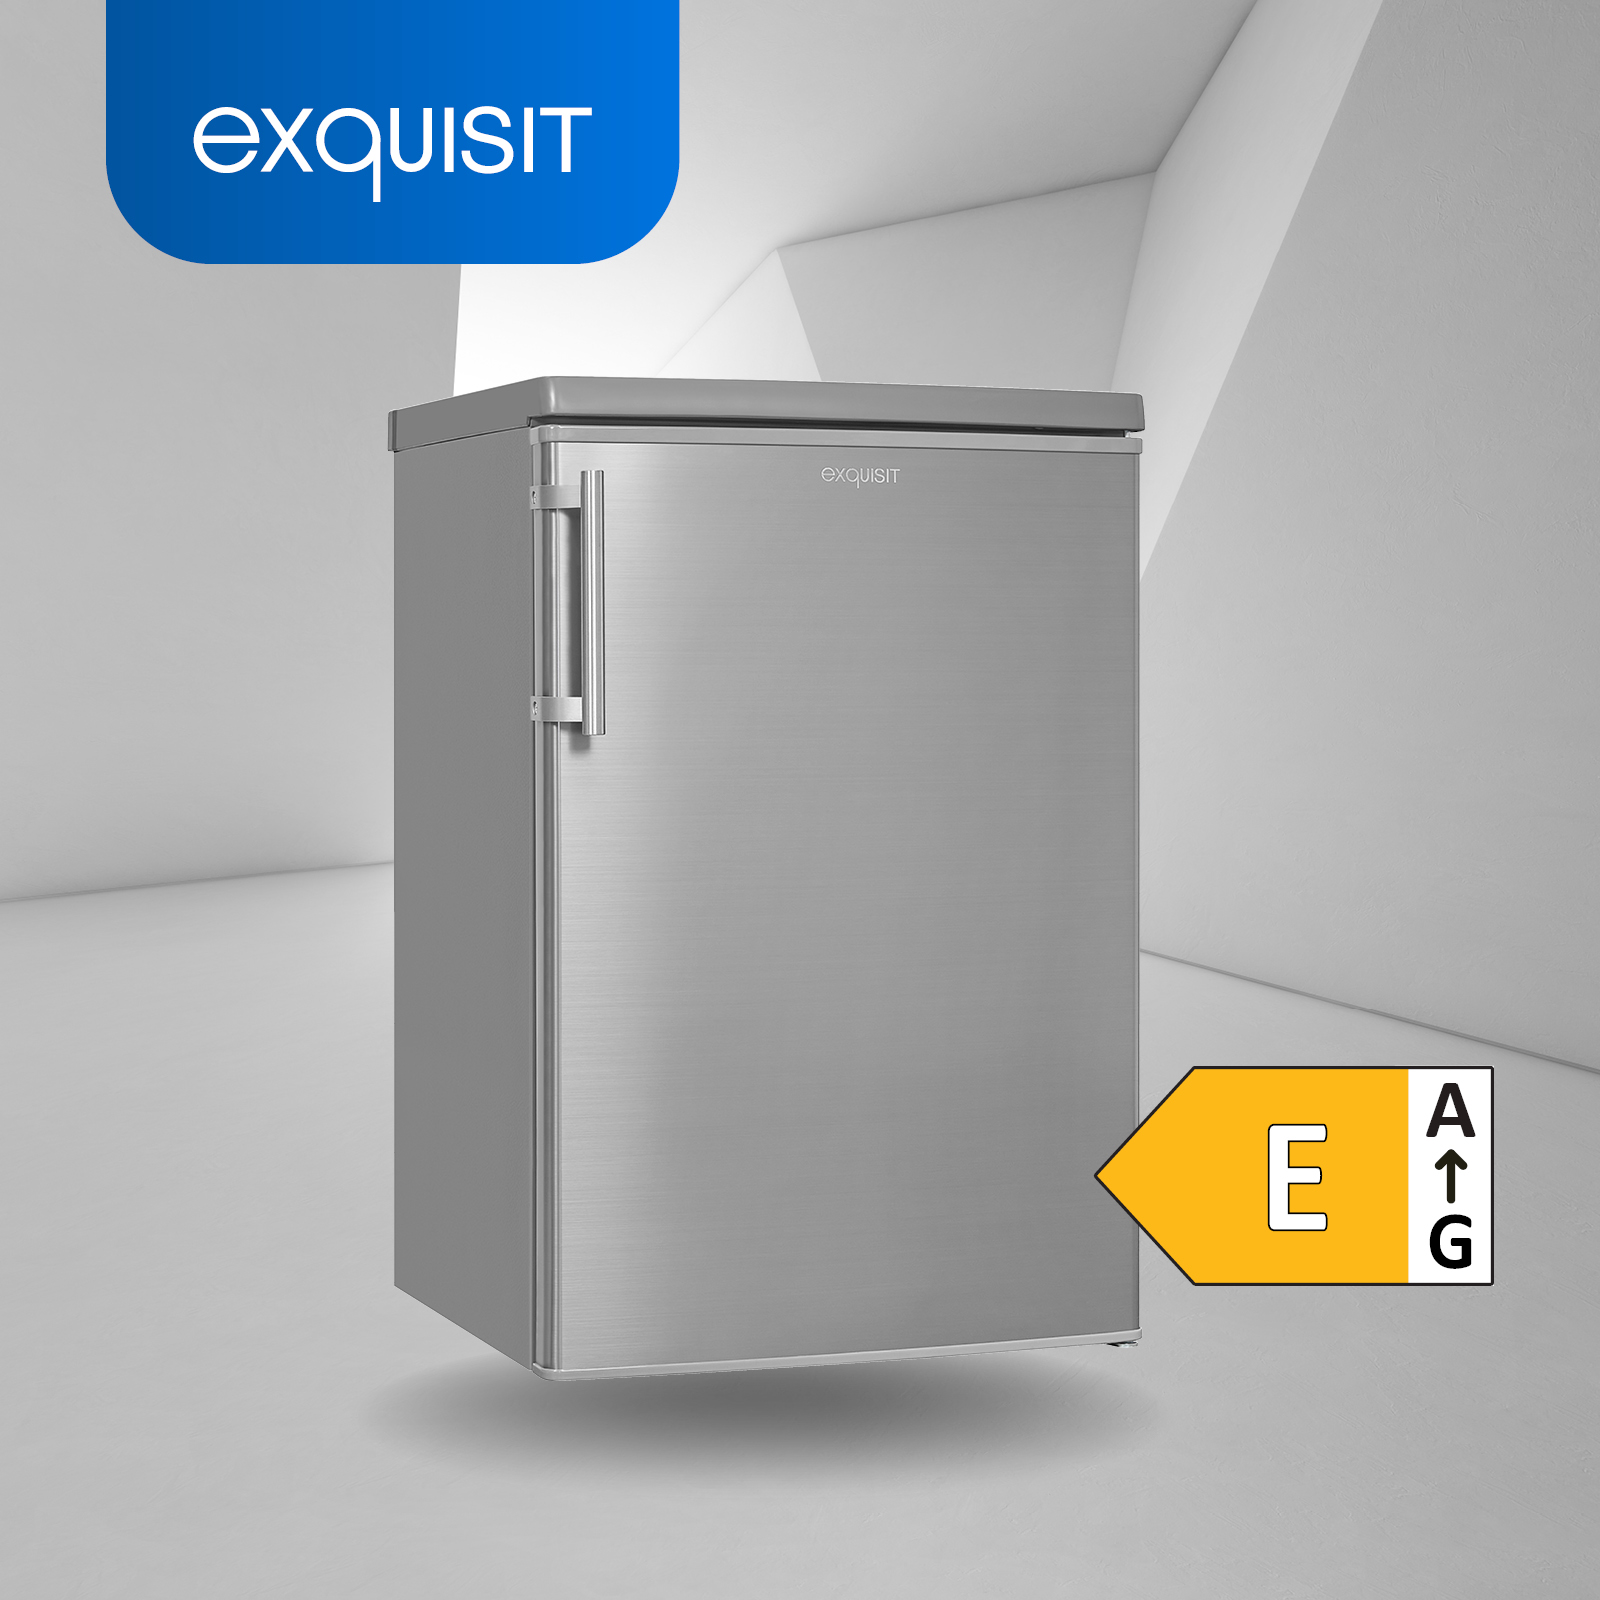 EXQUISIT KS16-4-HE-040E inoxlook Kühlschrank mm 855 hoch, (139,00 kWh/Jahr, Edelstahloptik) E